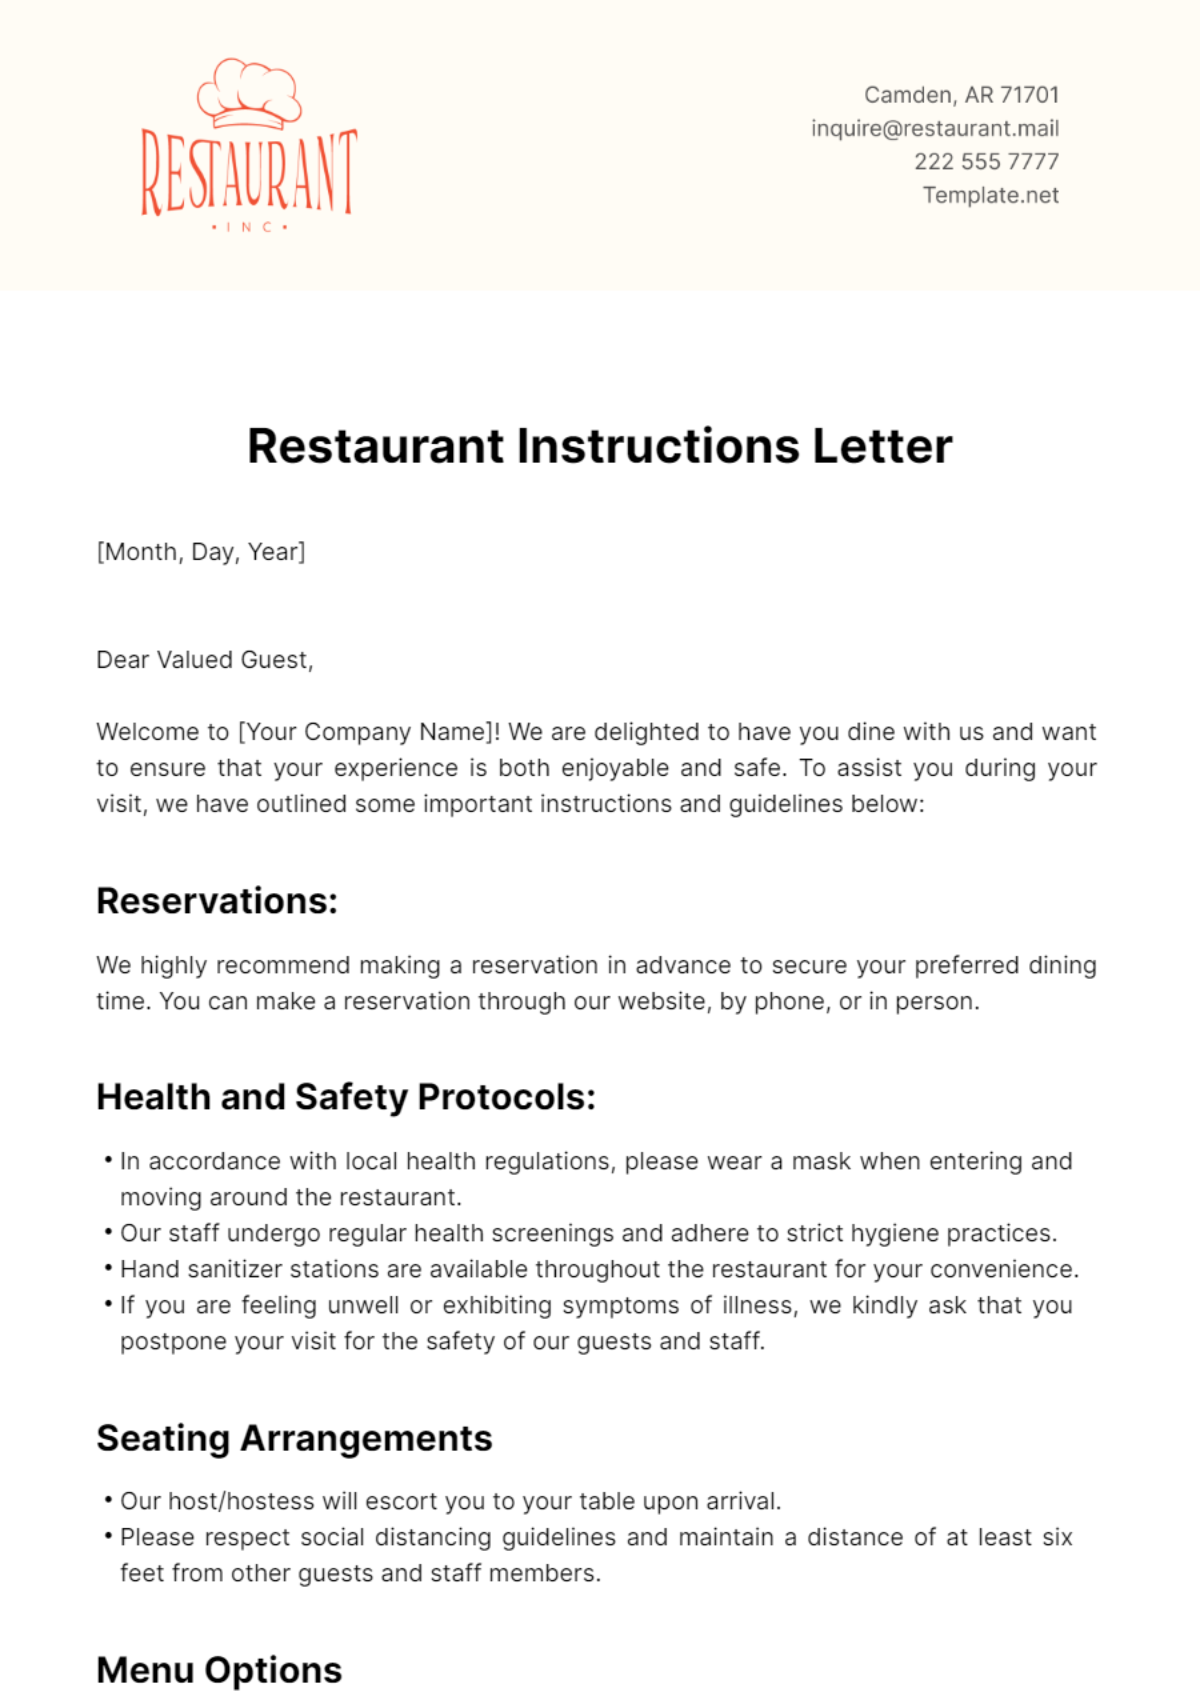 Restaurant Instructions Letter Template